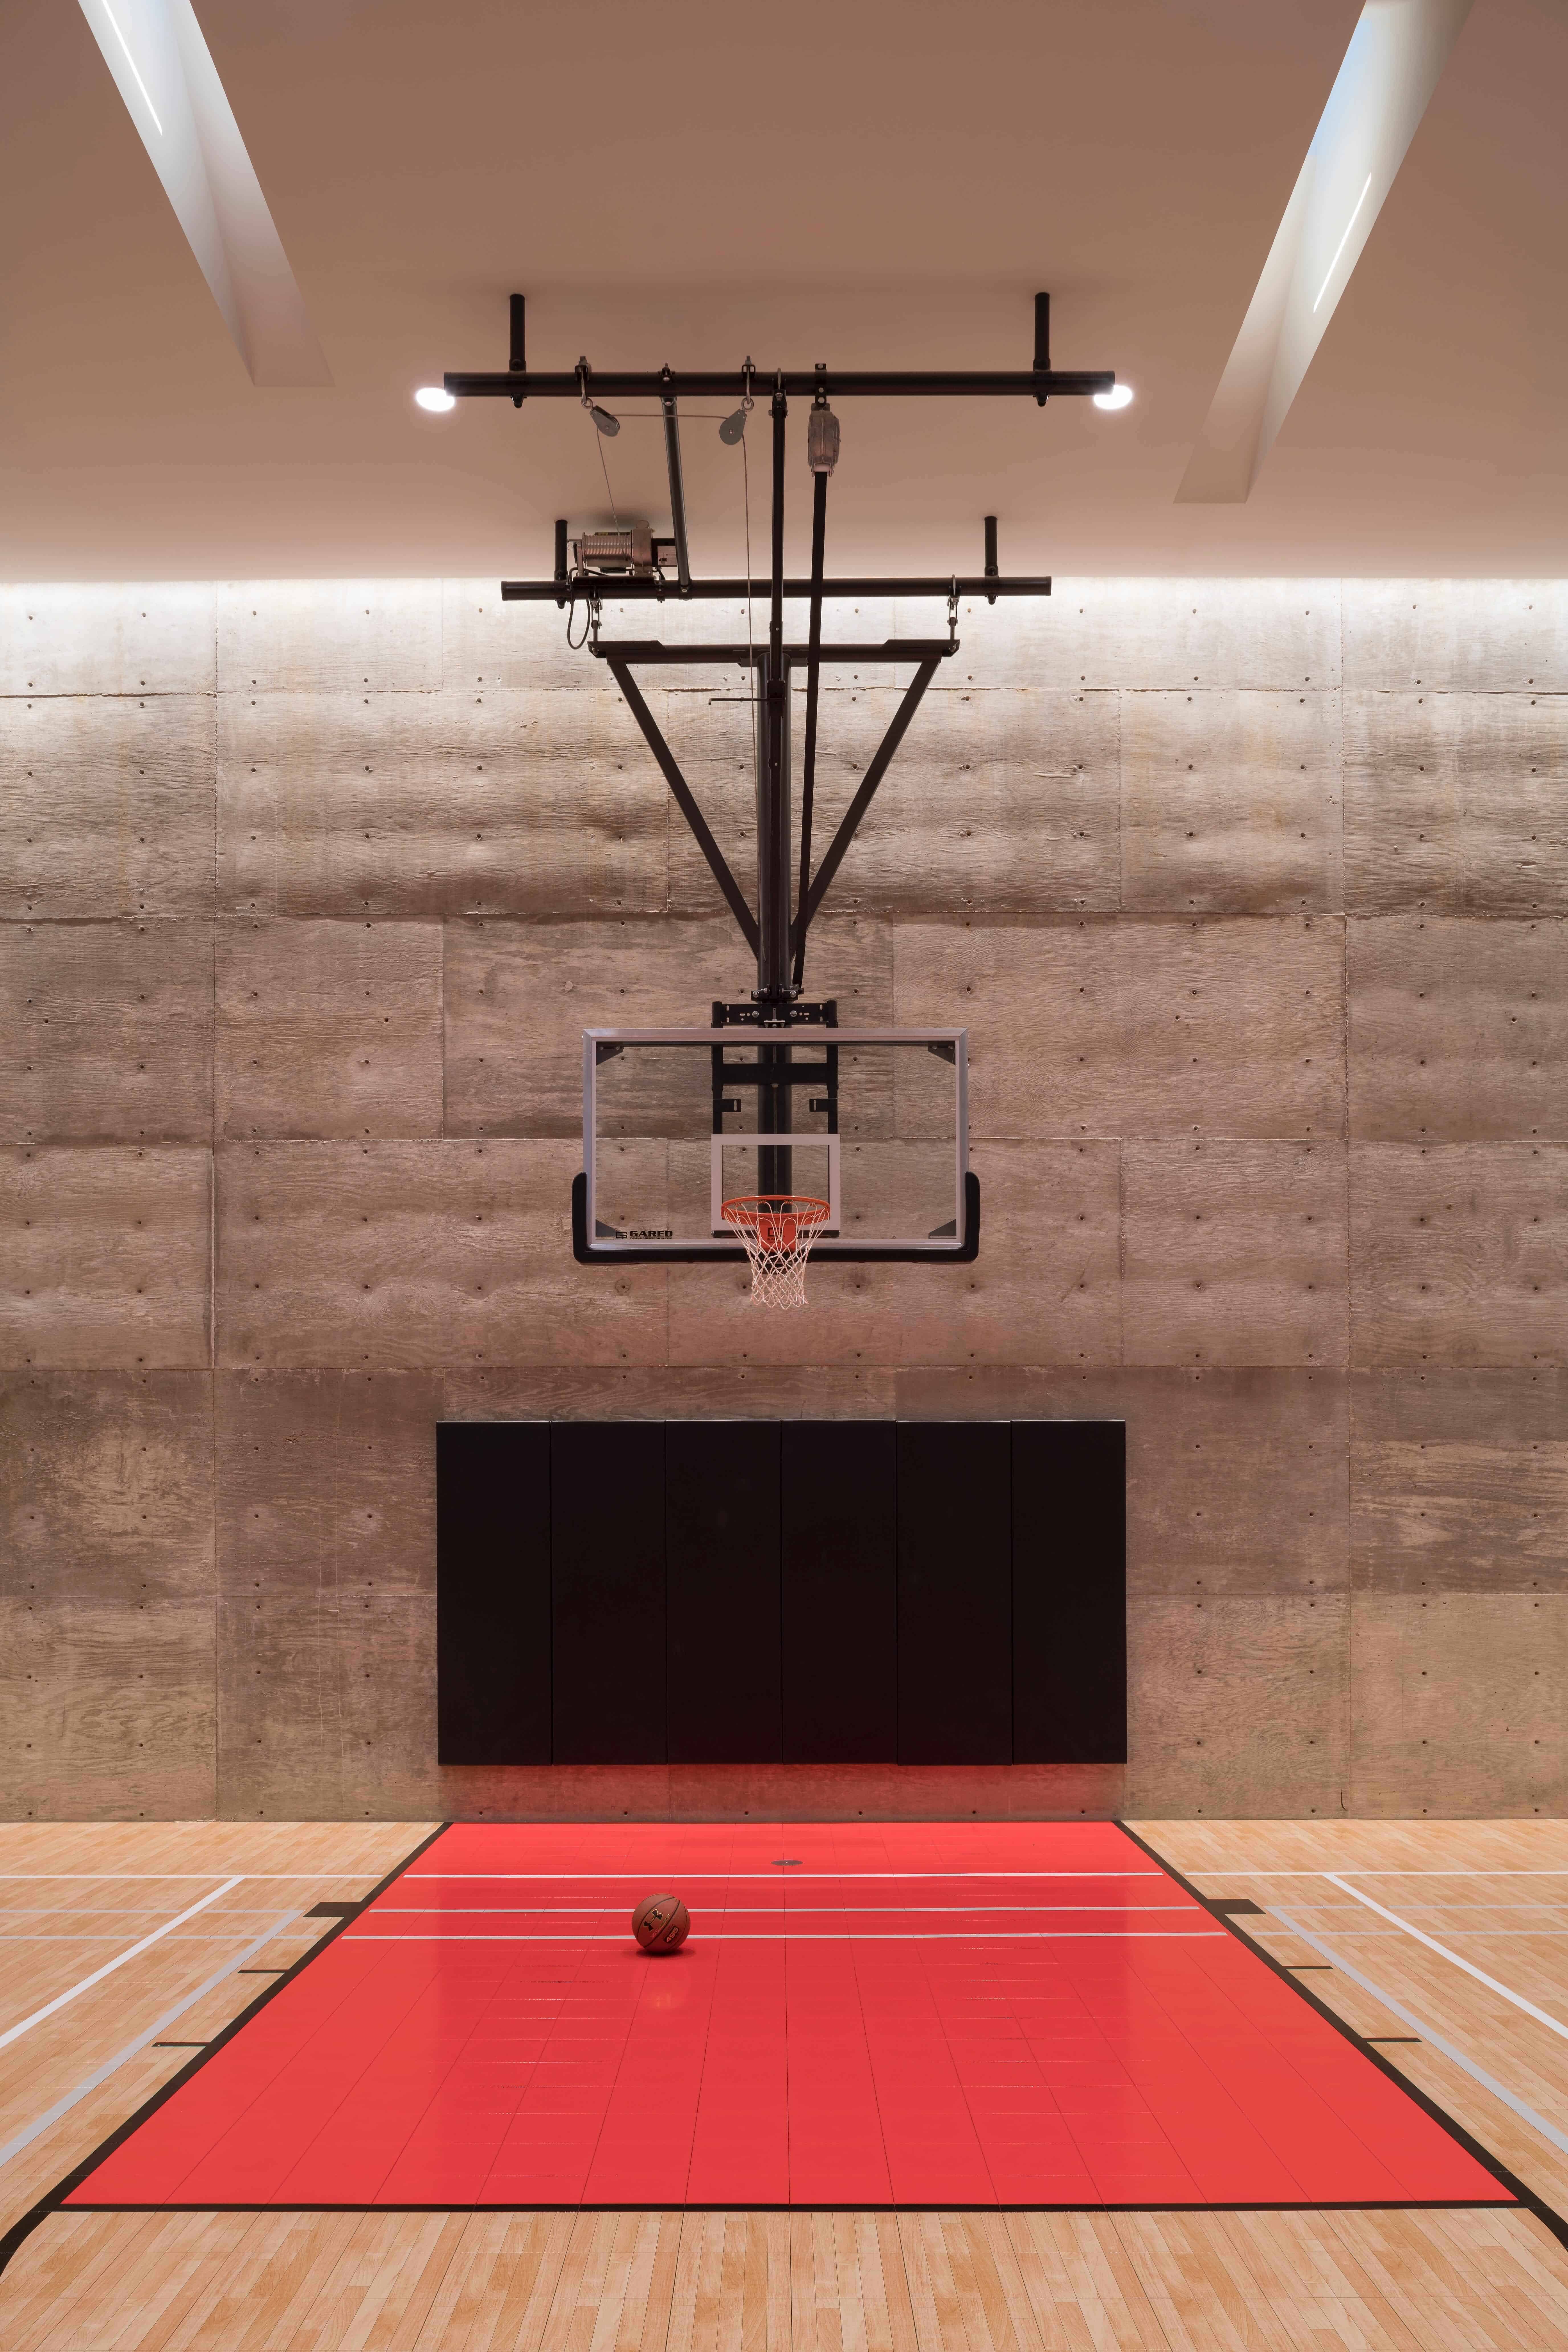 Krause Residence Basketball Court